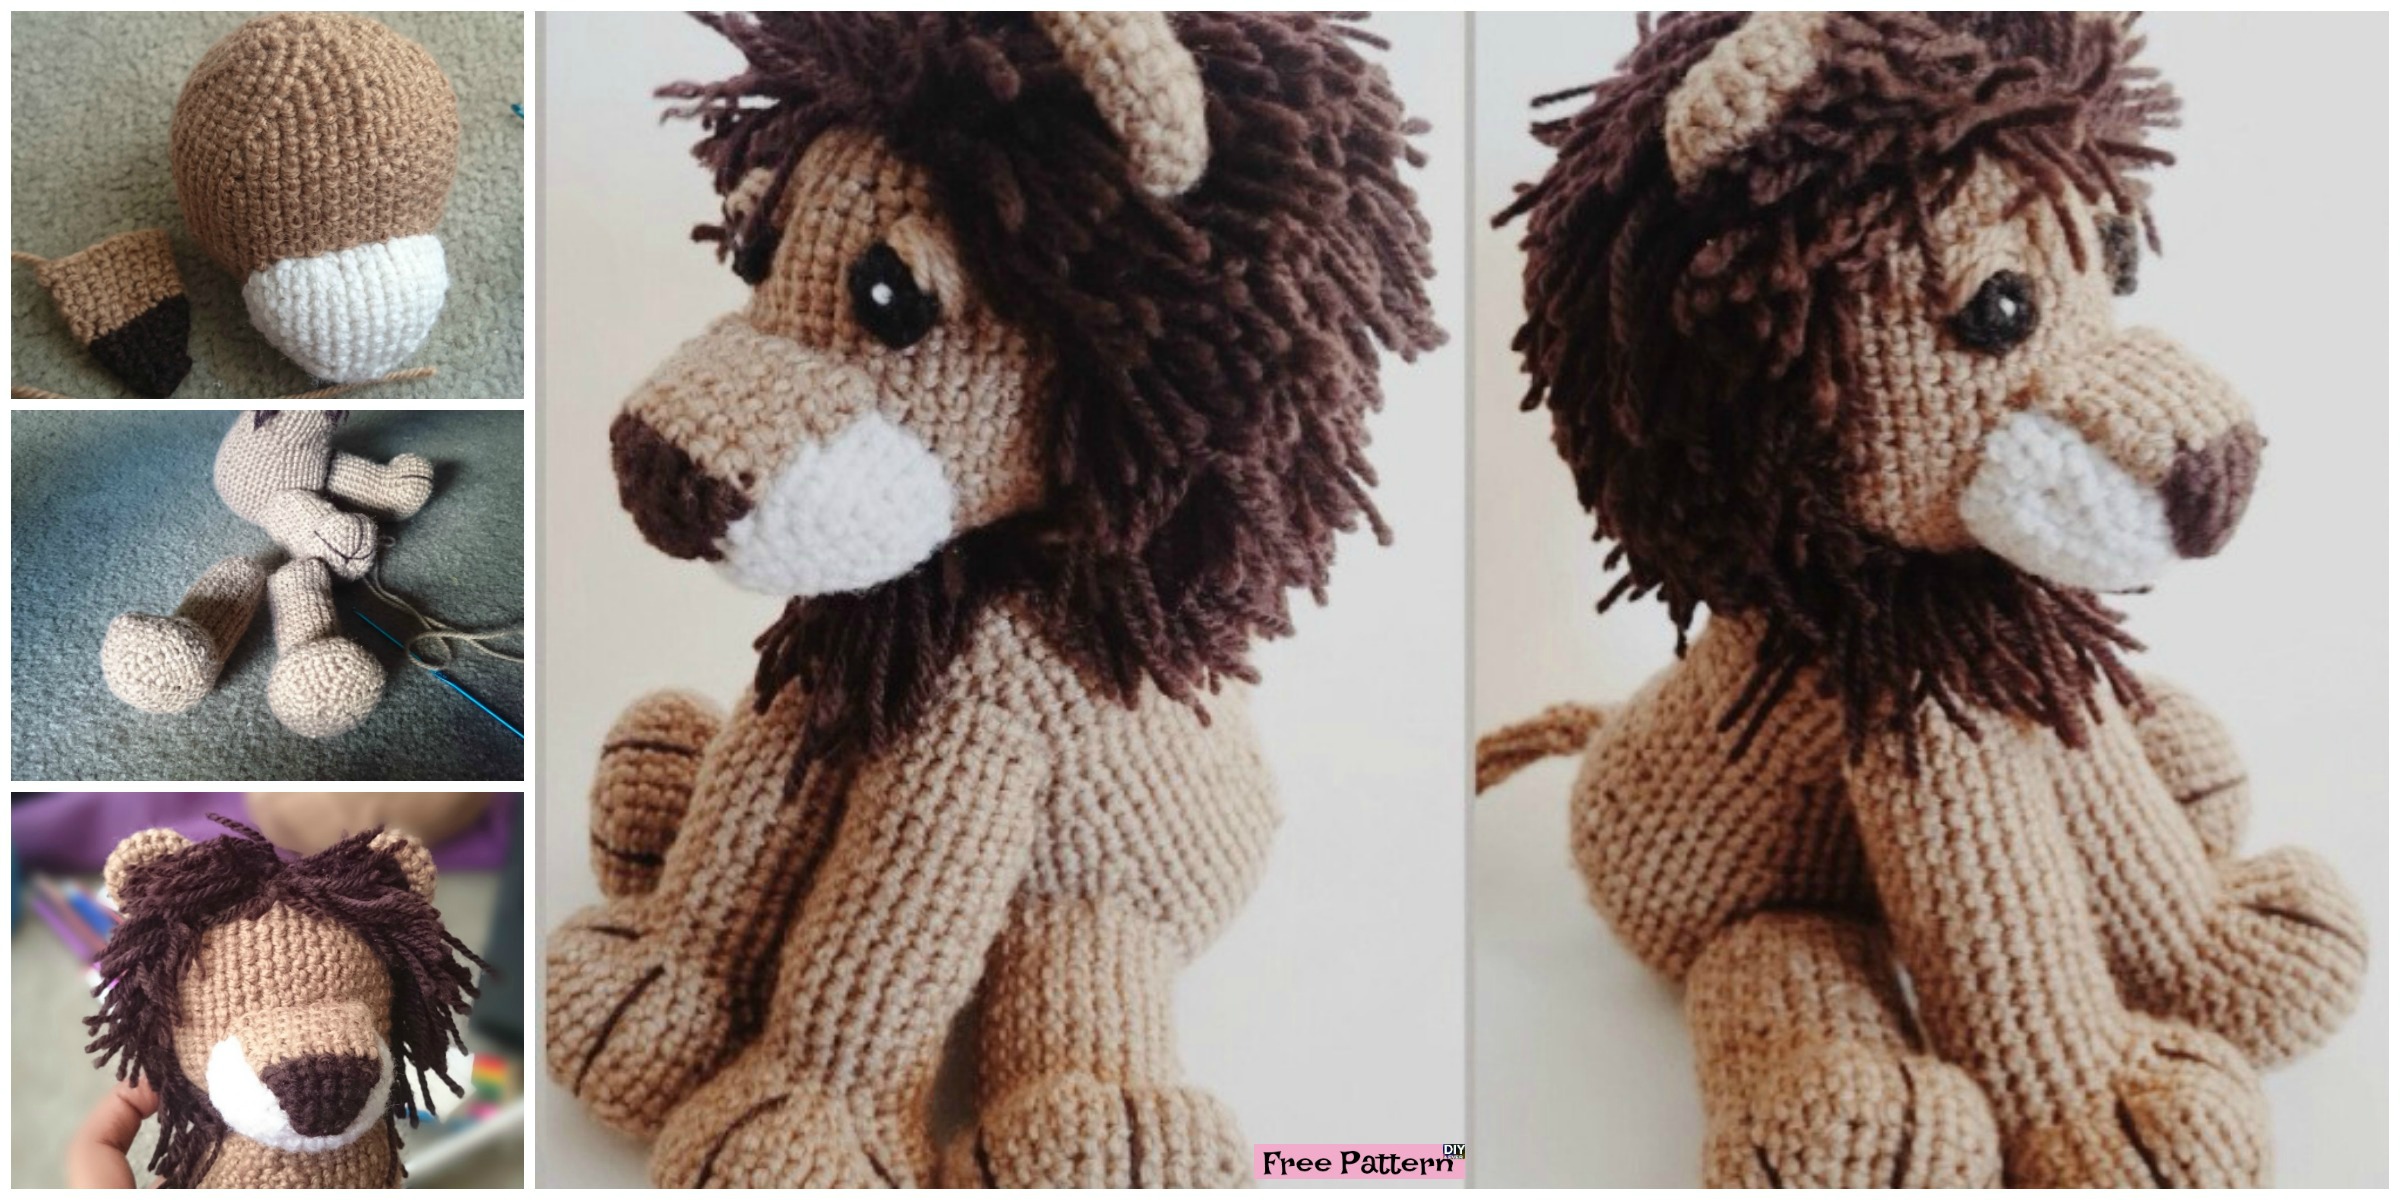 Crochet Lion Amigurumi – Free Pattern